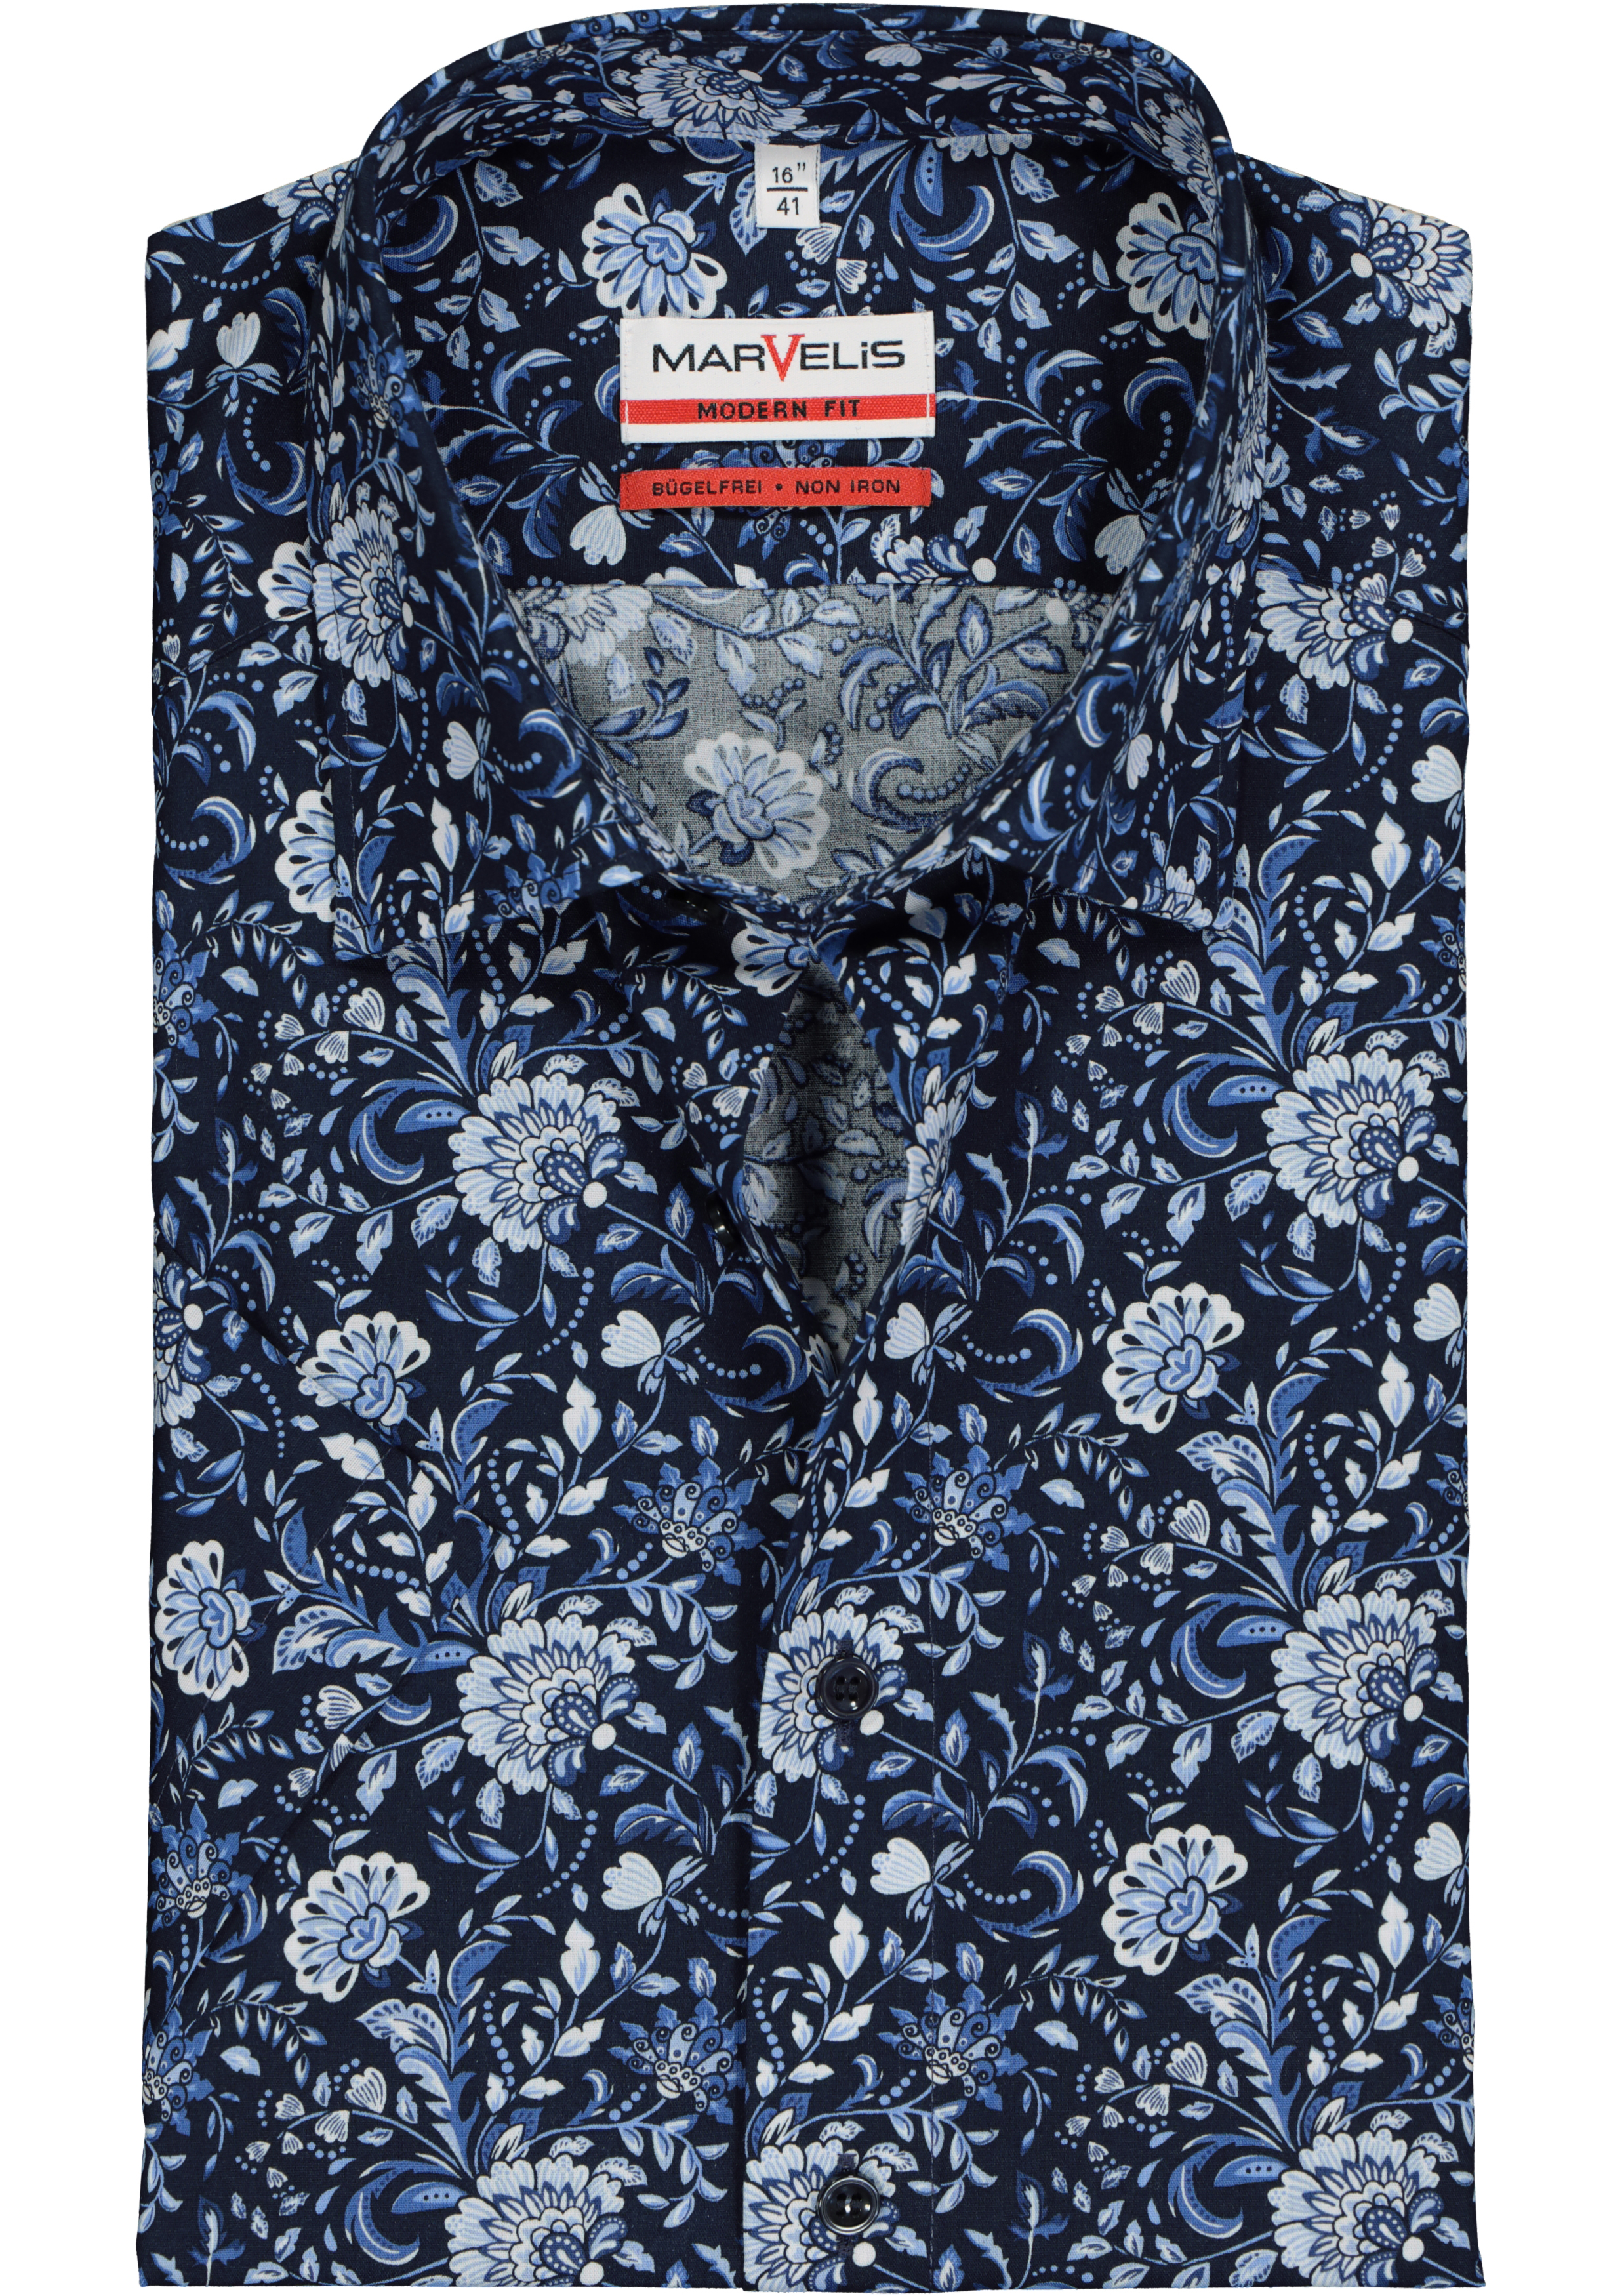 MARVELIS modern fit overhemd, korte mouw, popeline, blauw bloemen dessin